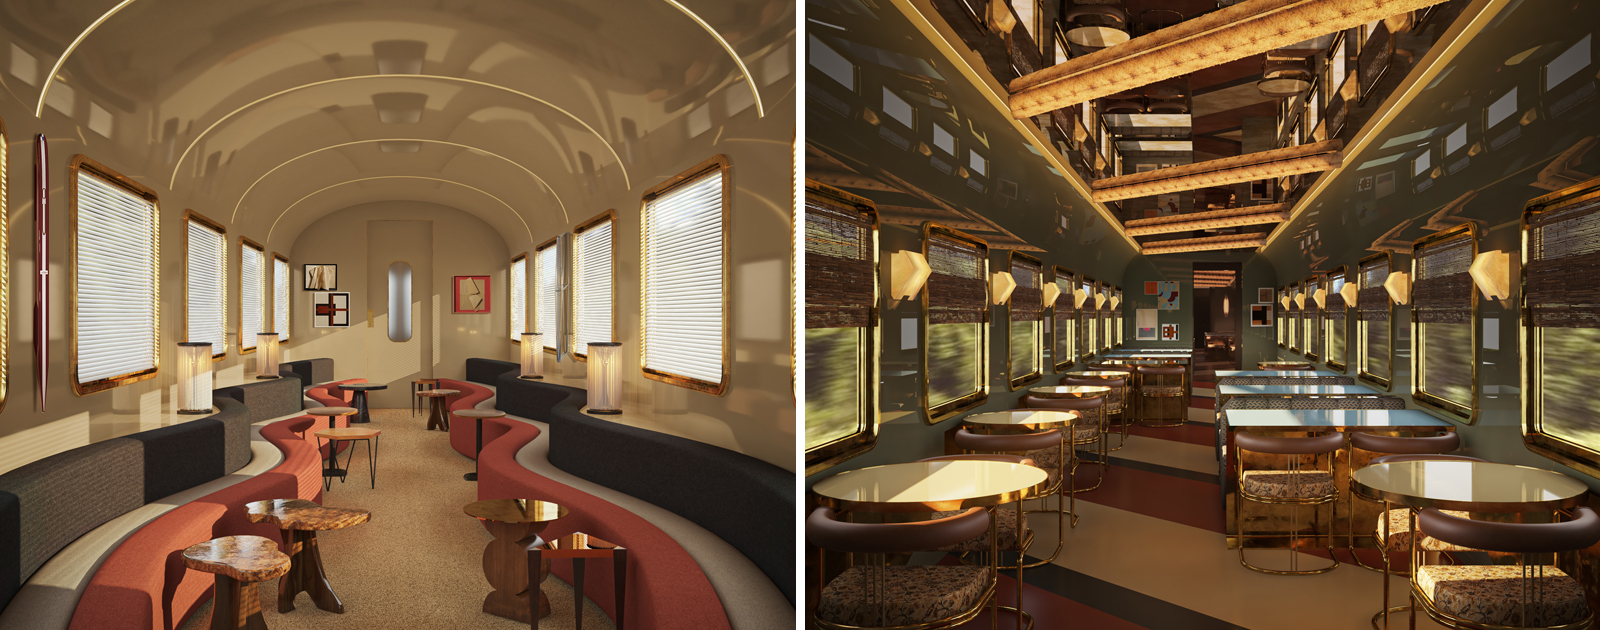 Orient Express La Dolce Vita Train Speisen